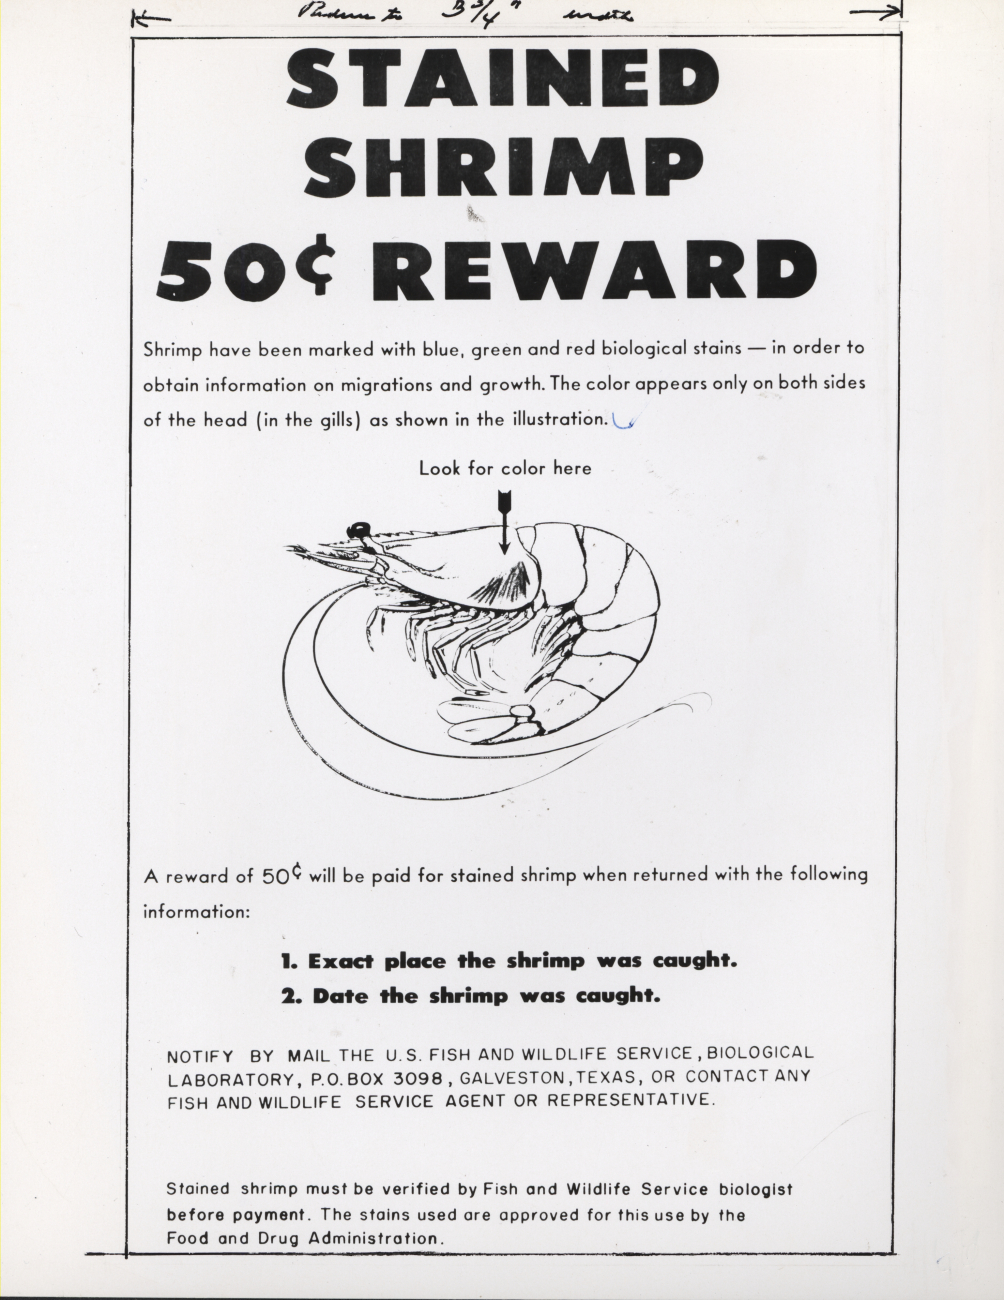 Reward poster for return of stained shrimp